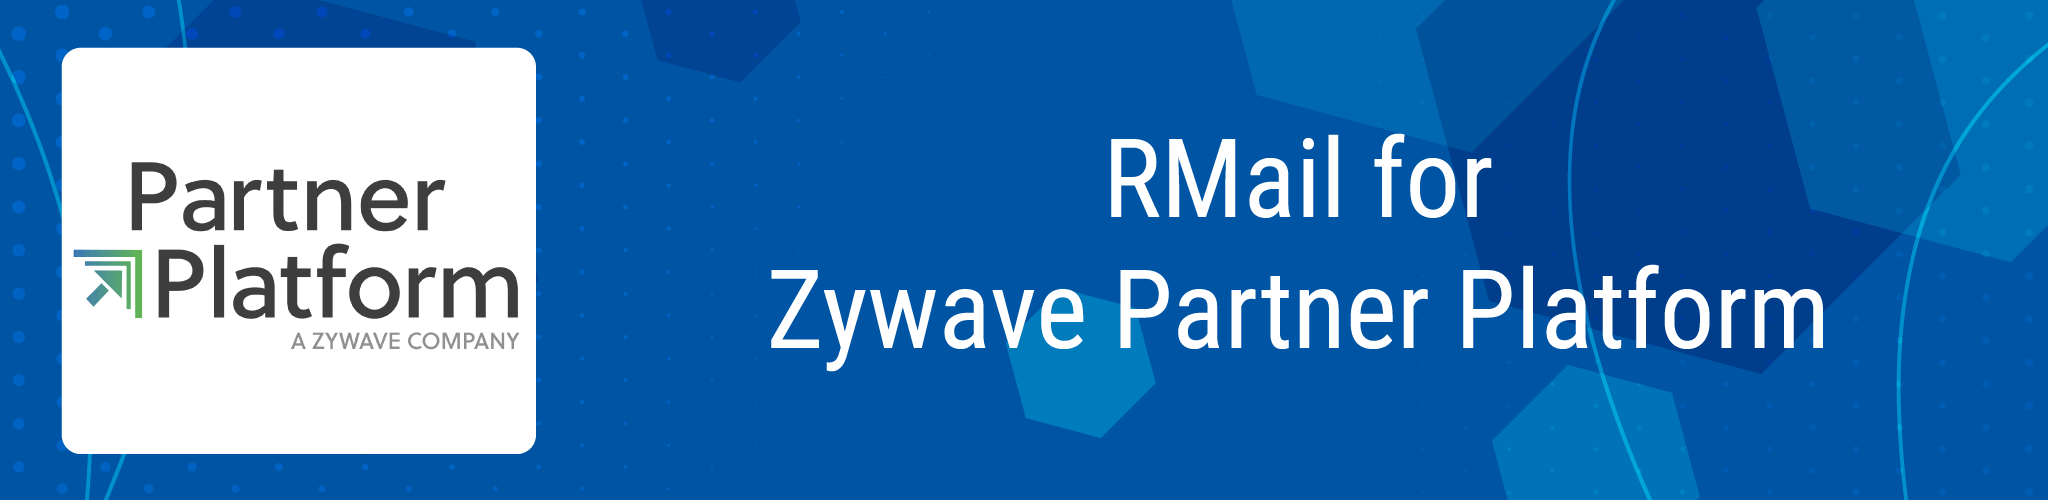 RMail for Zywave Partner Platform